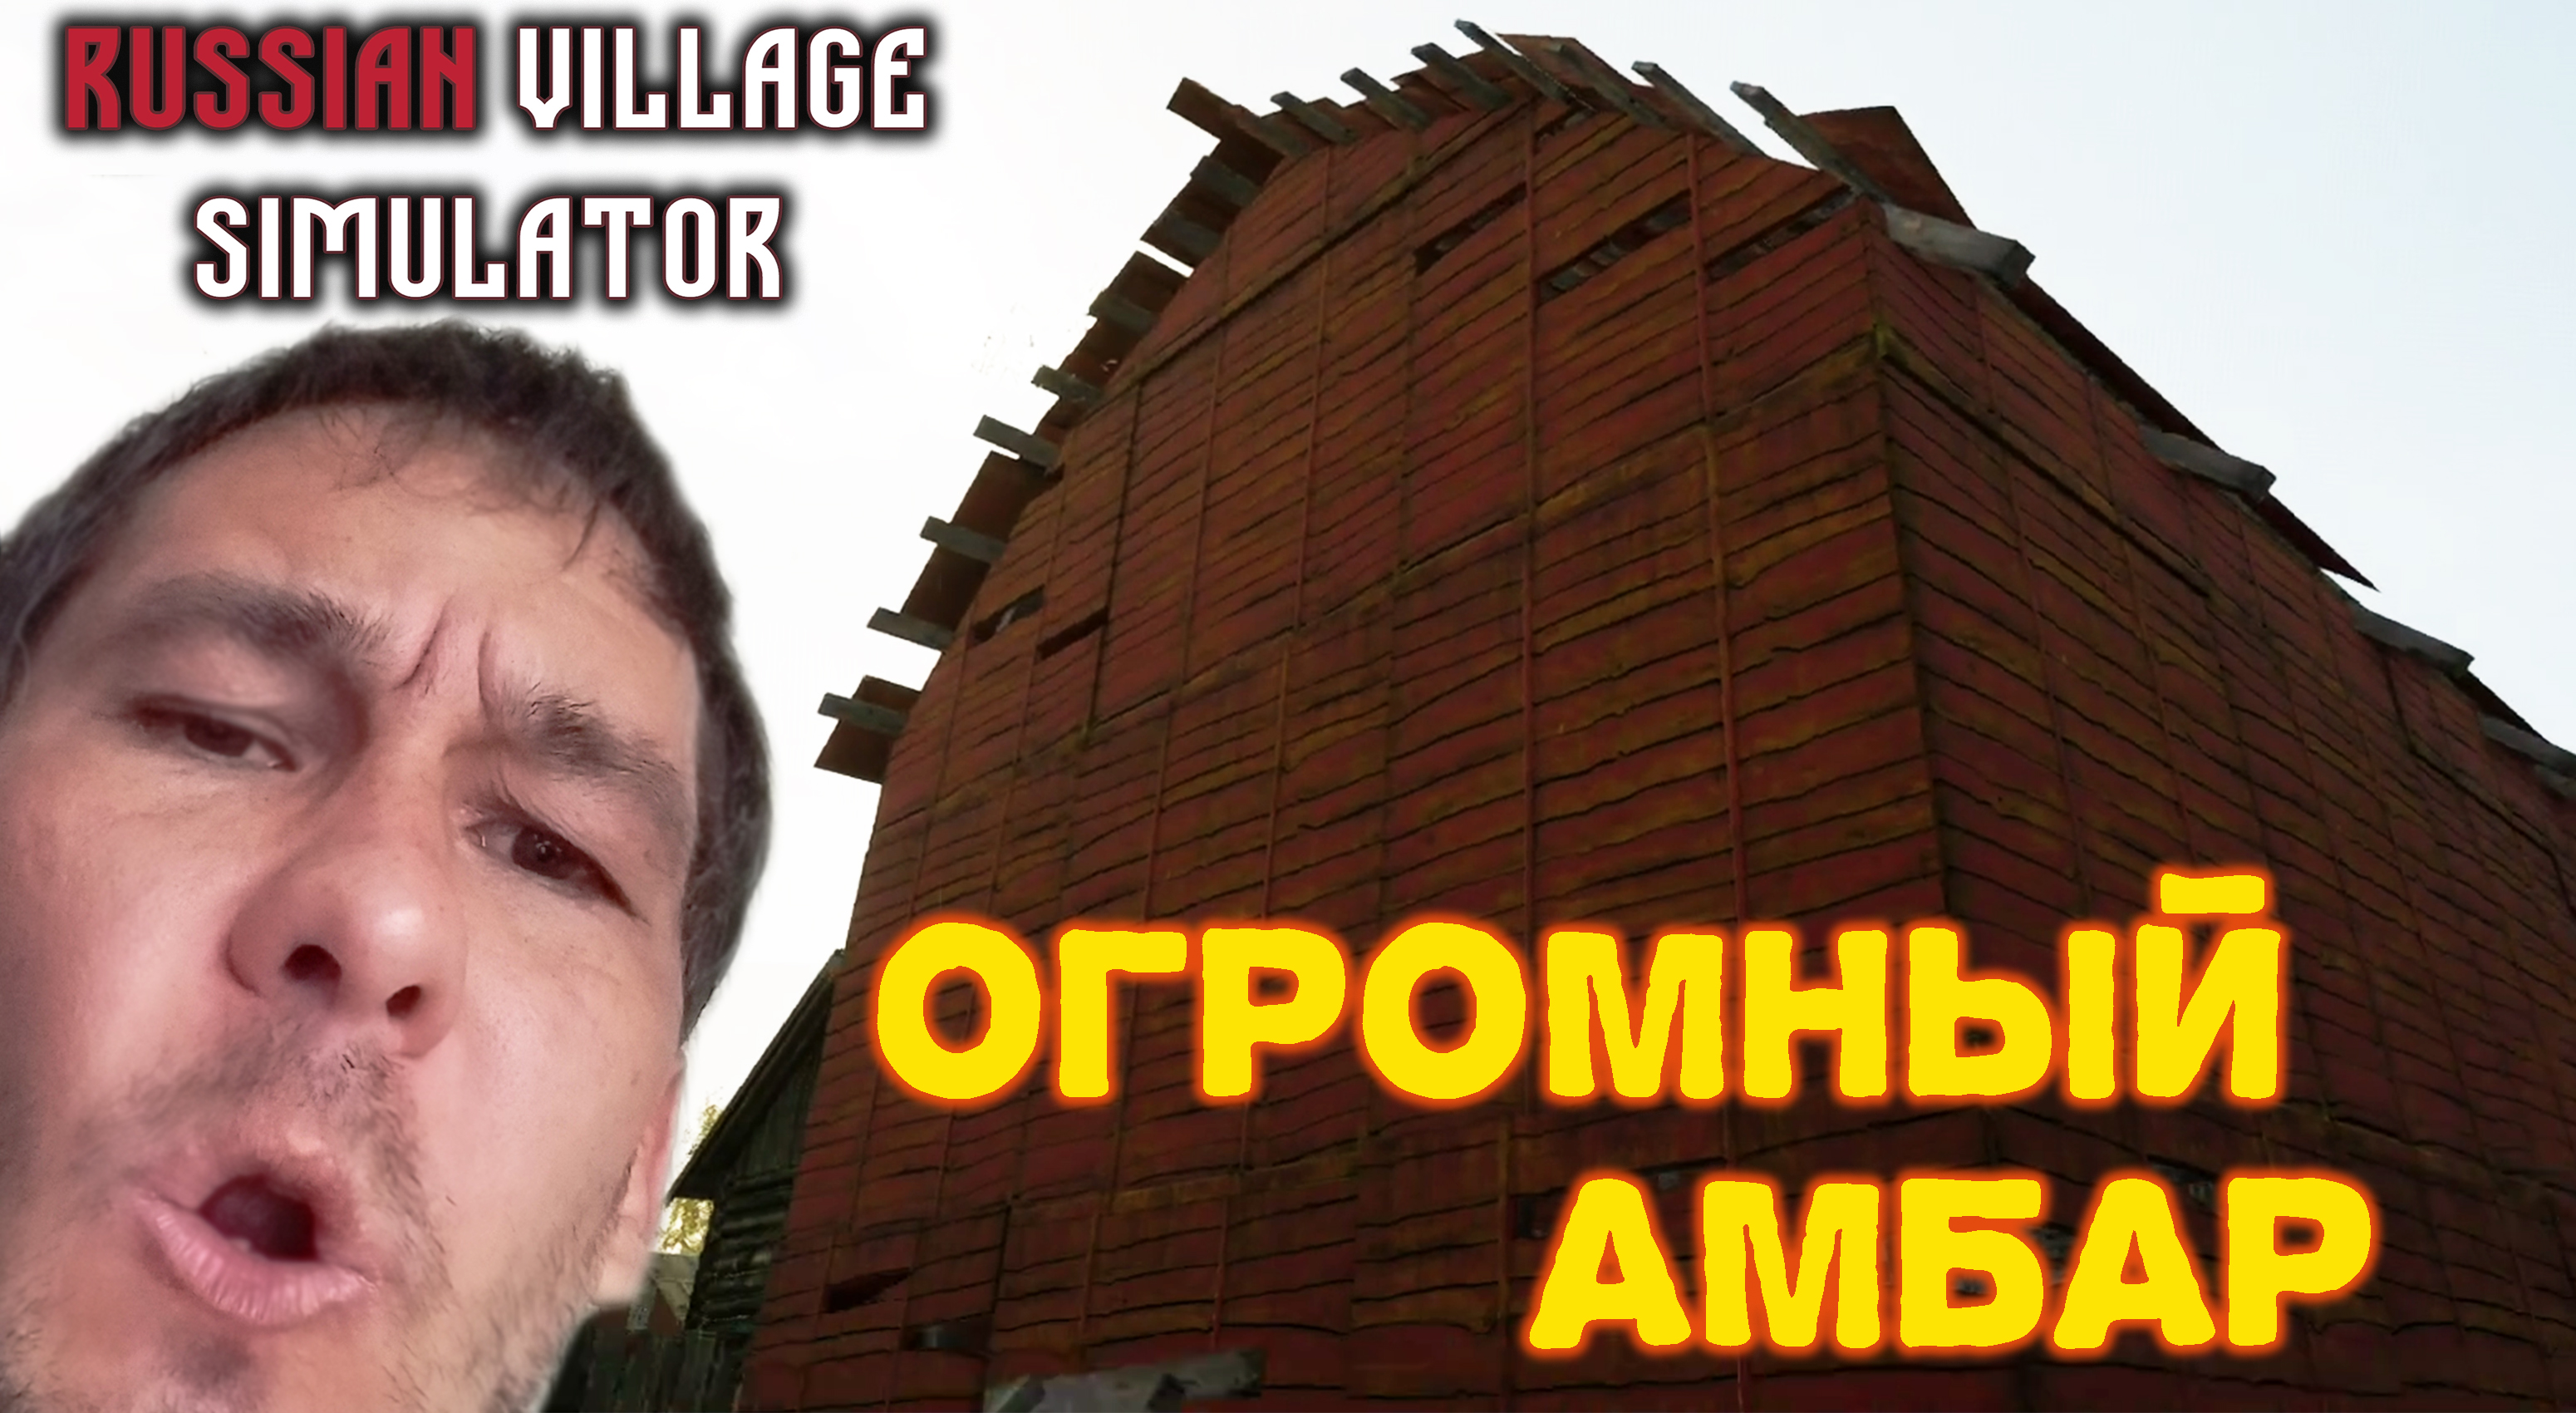 ПОСТРОИЛ БОЛЬШУЩИЙ АМБАР! ЗАЧЕМ_ ◈ Russian Village Simulator #8